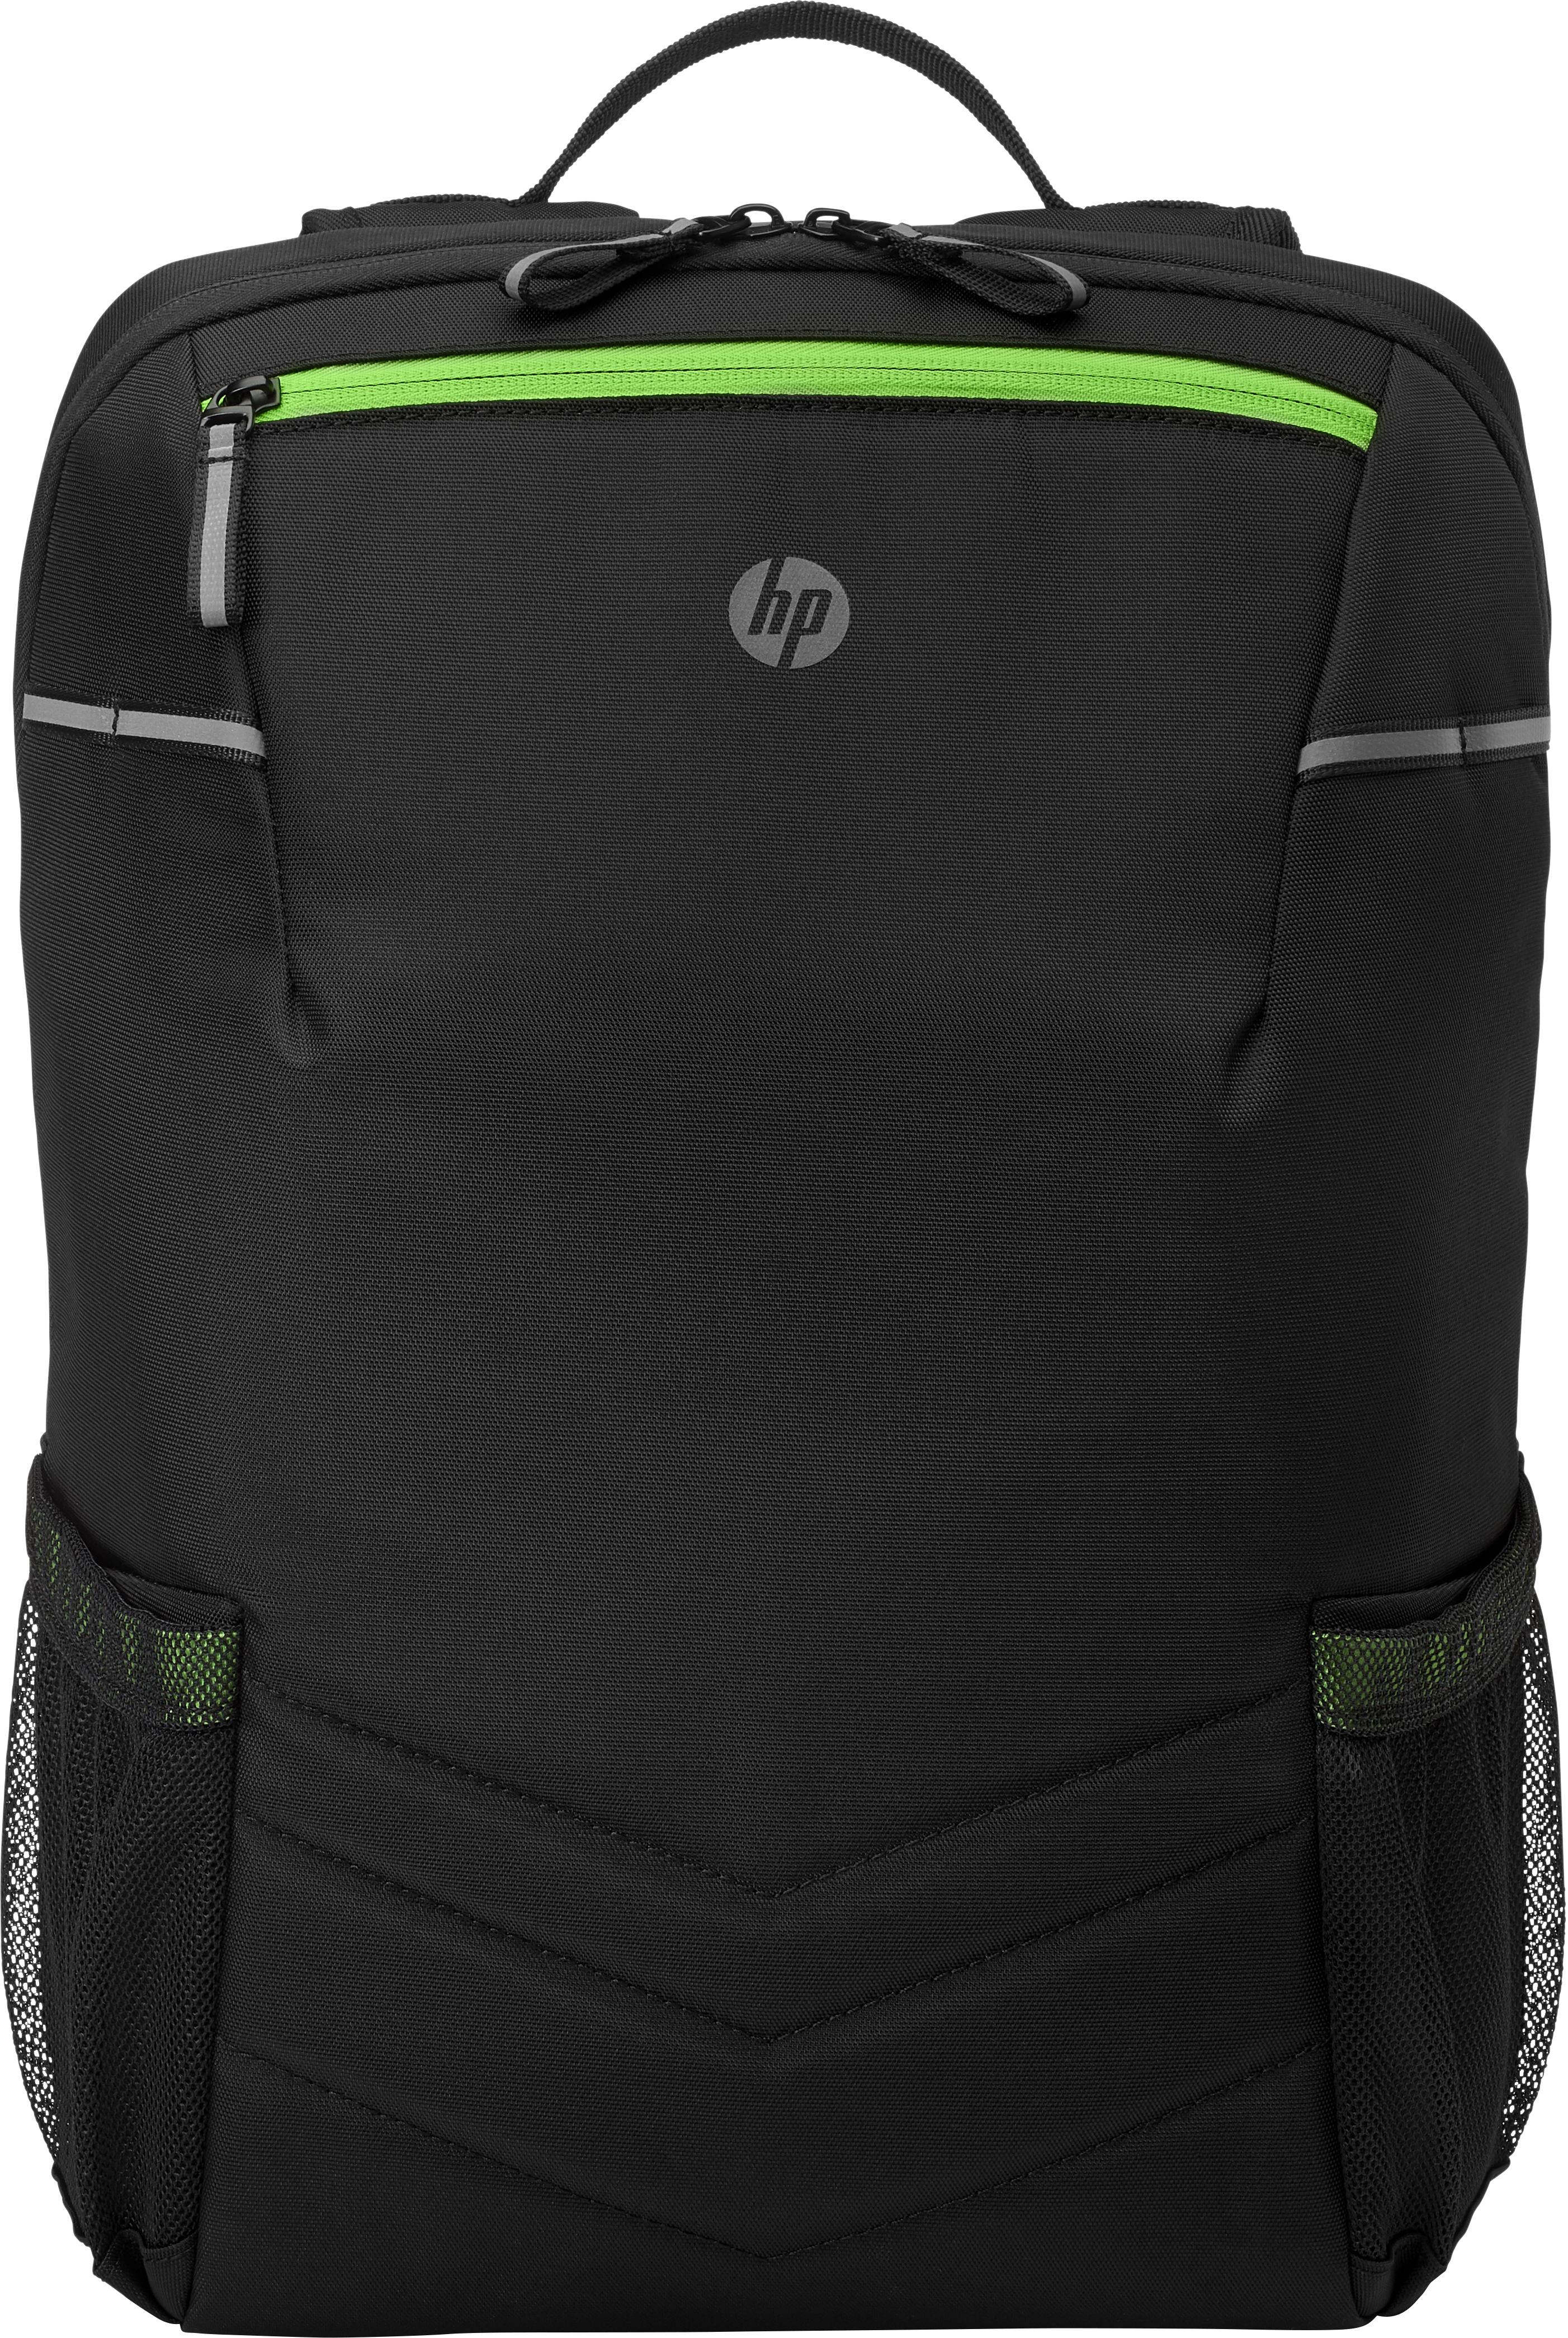 HP Pavilion Gaming Backpack